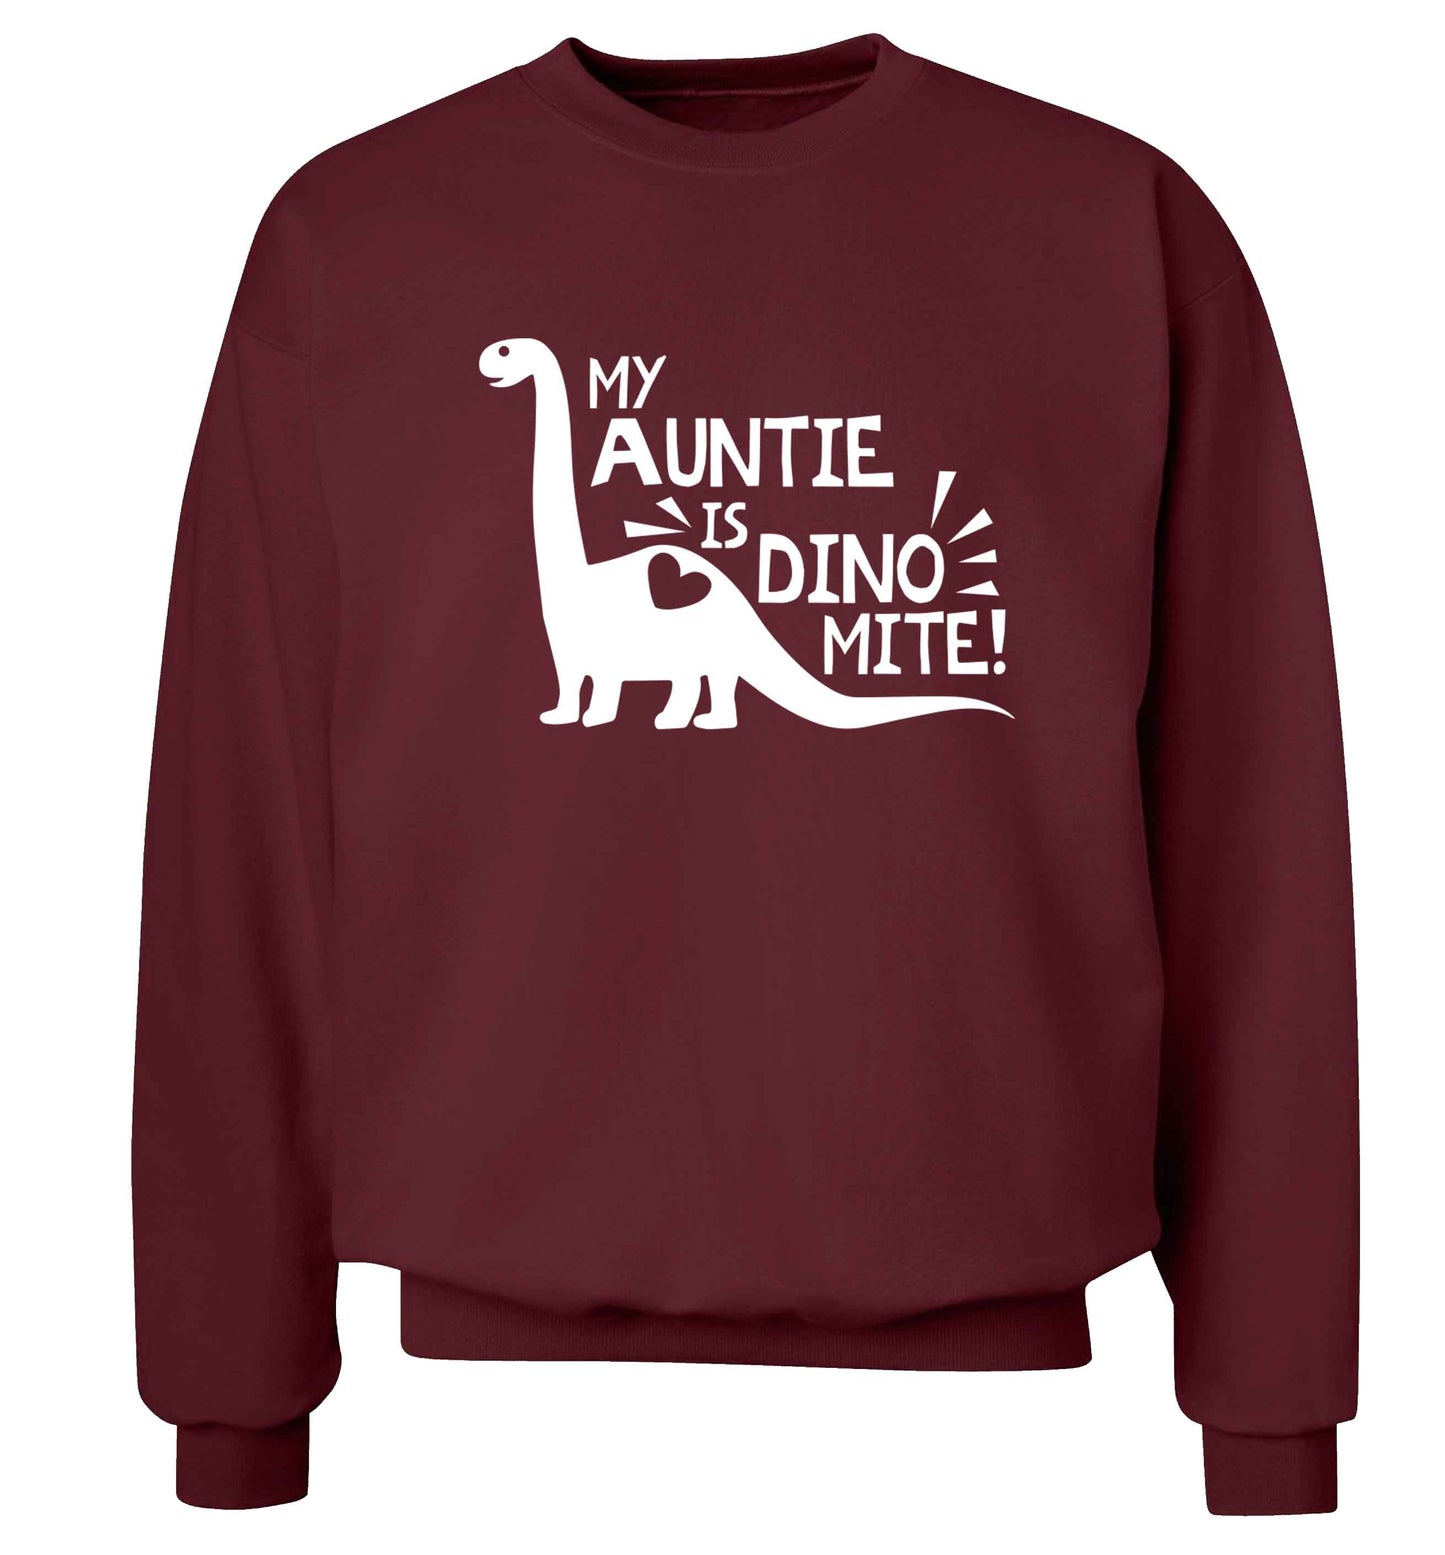 My auntie is dinomite! Adult's unisex maroon Sweater 2XL